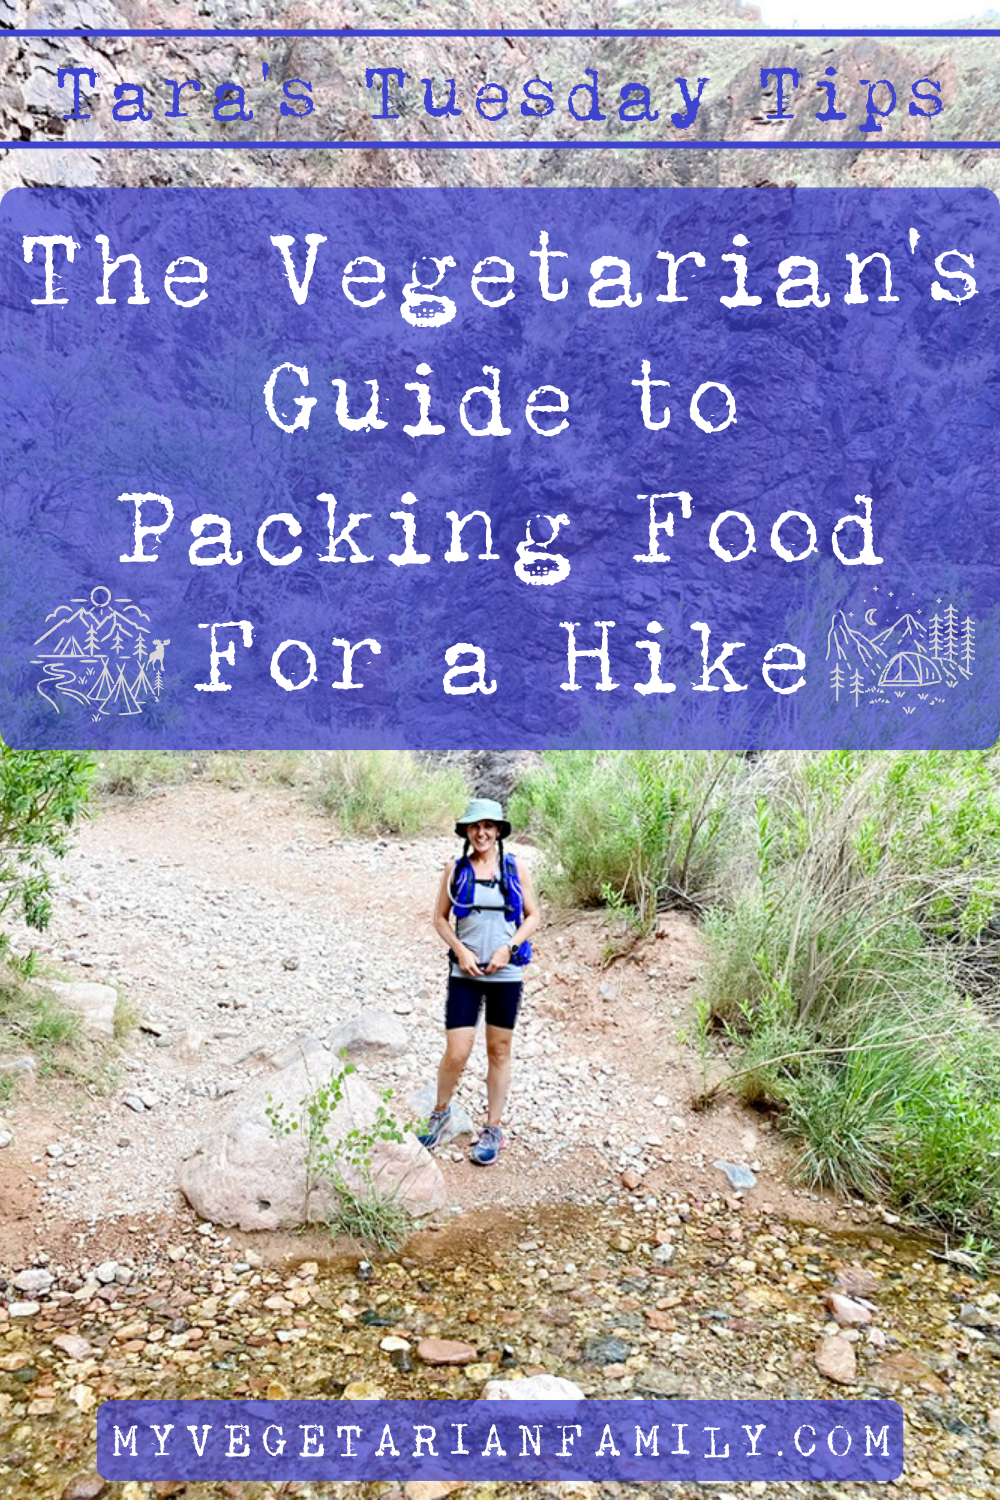 The Vegetarian's Guide To Packing Food For a Hike | My Vegetarian Family Tara's Tuesday Tips #veganbackpacking #vegetarianhiking #plantbasedrimtorim